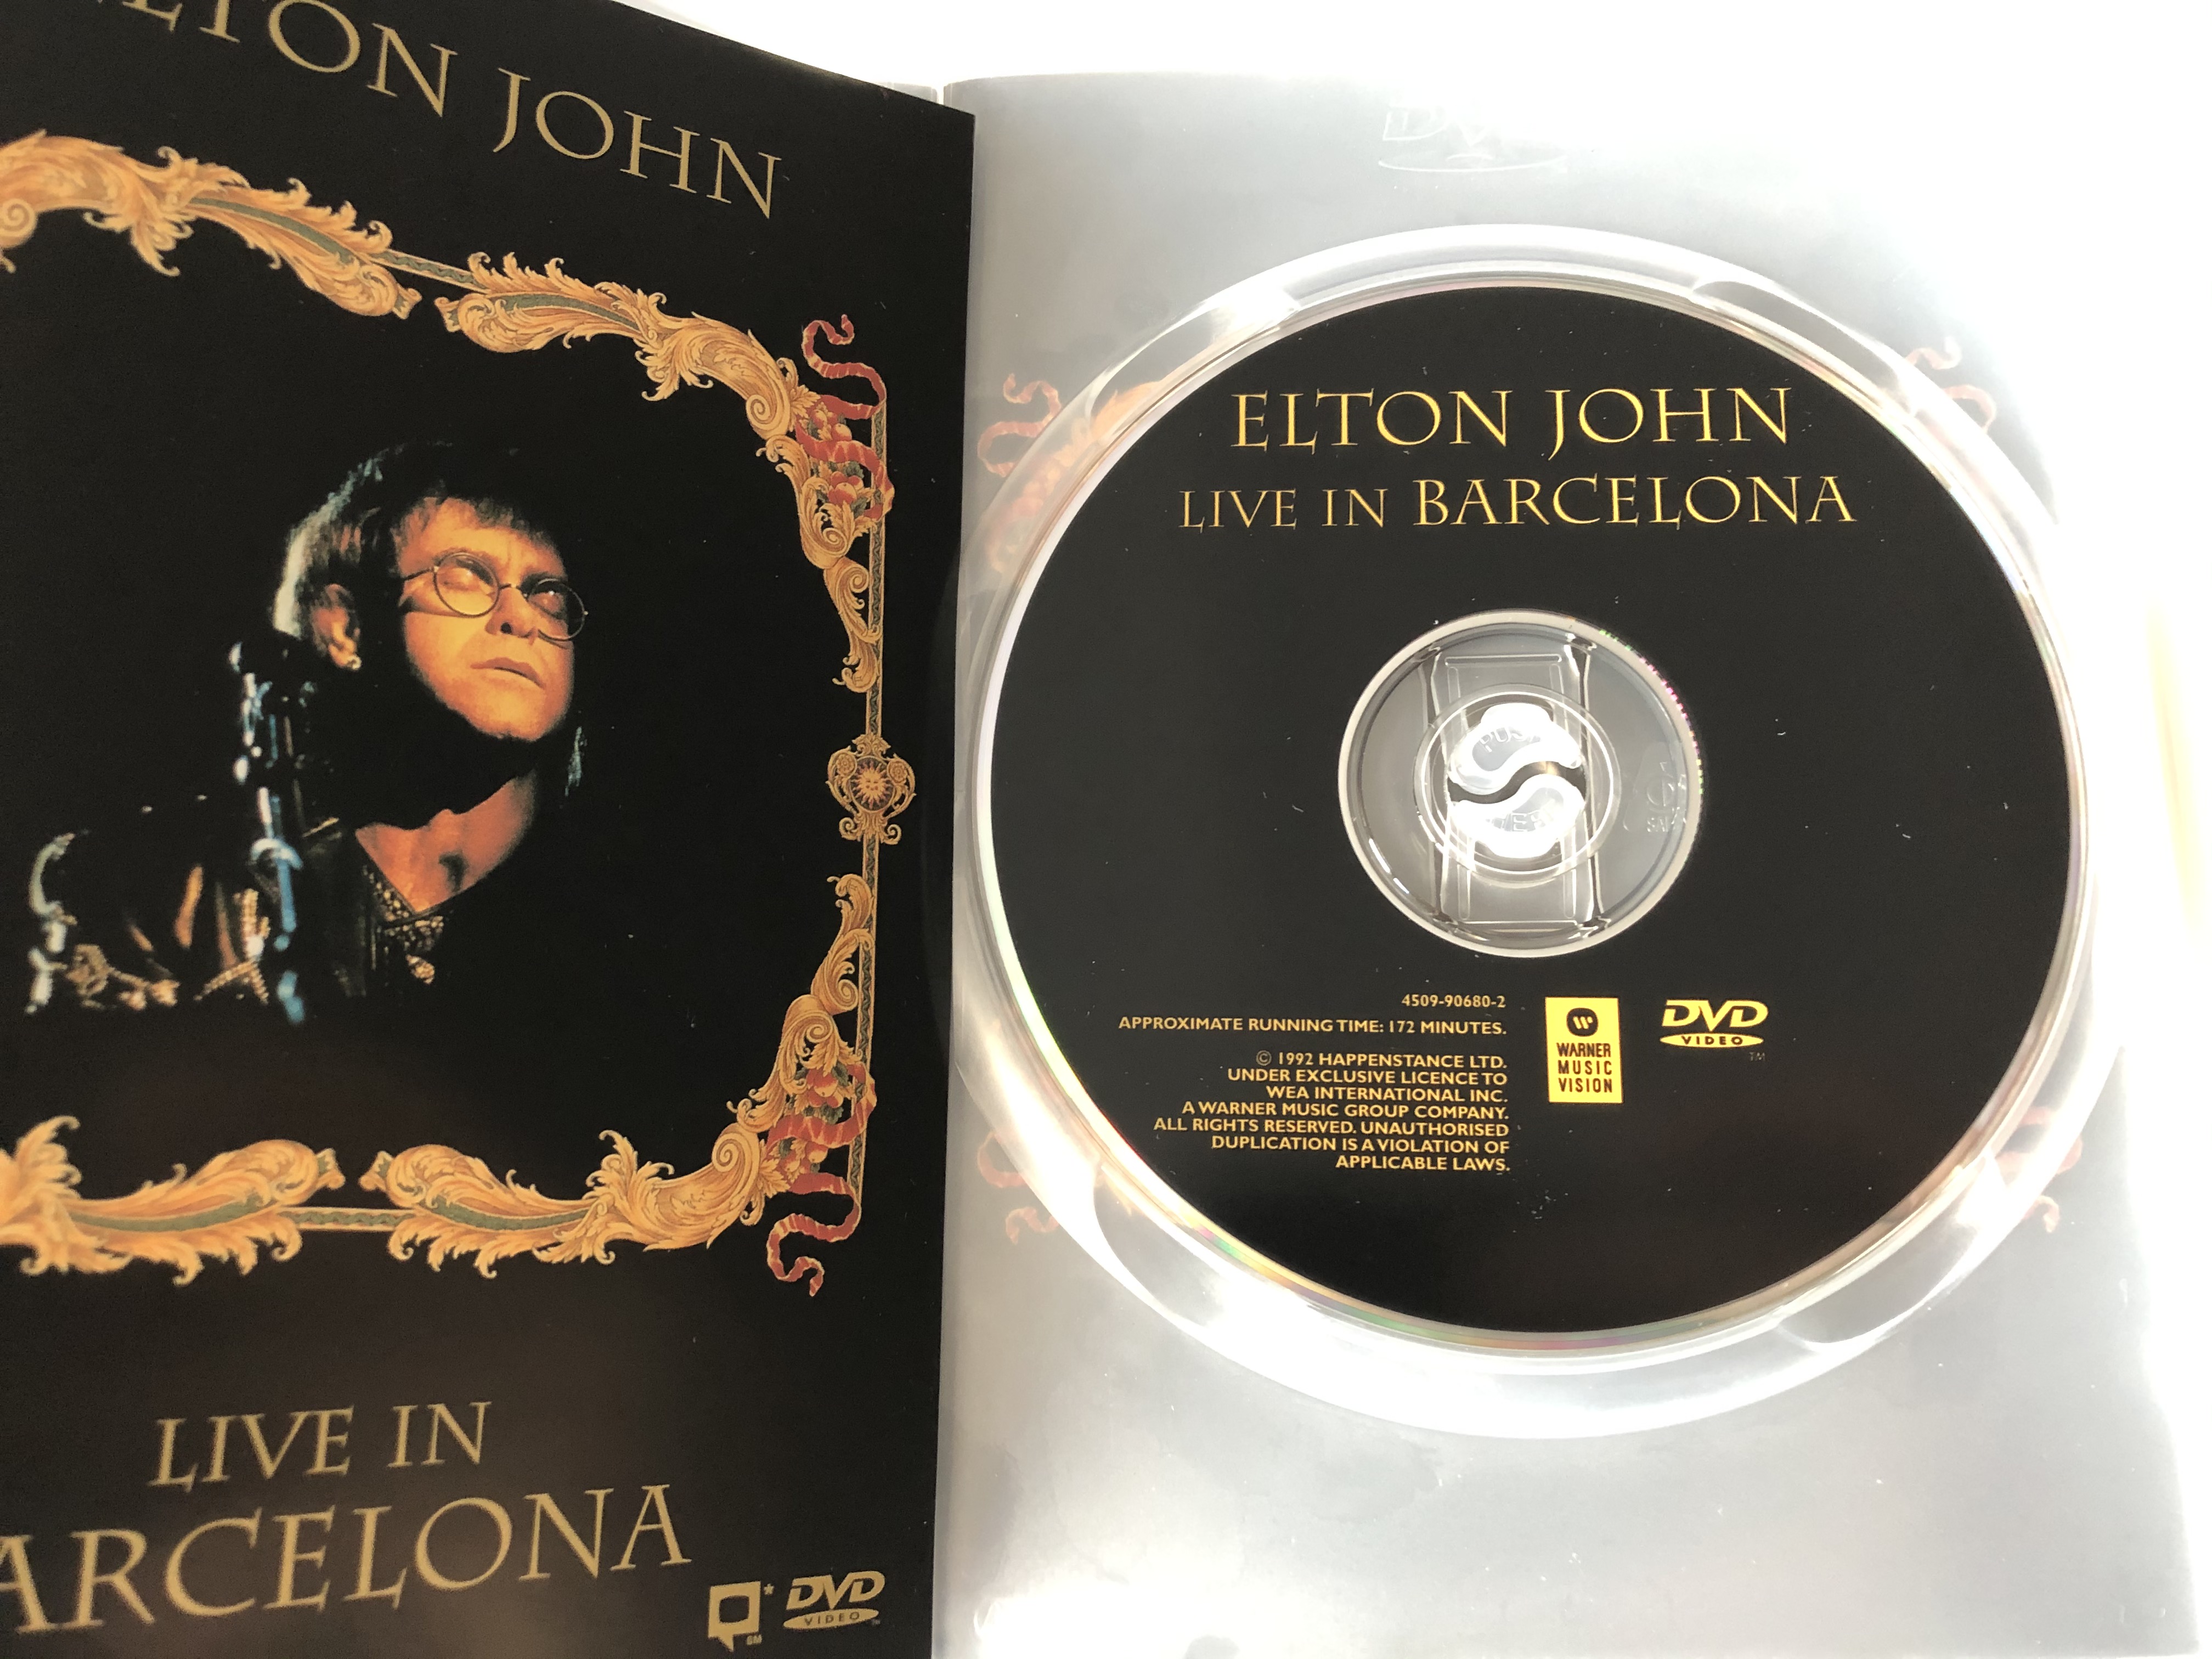 Elton John DVD 1992 Live in Barcelona / Don't let the Sun go down on me,  I'm Still Standing, The Last Song, Sacrifice / Bonus 52 min documentary -  bibleinmylanguage